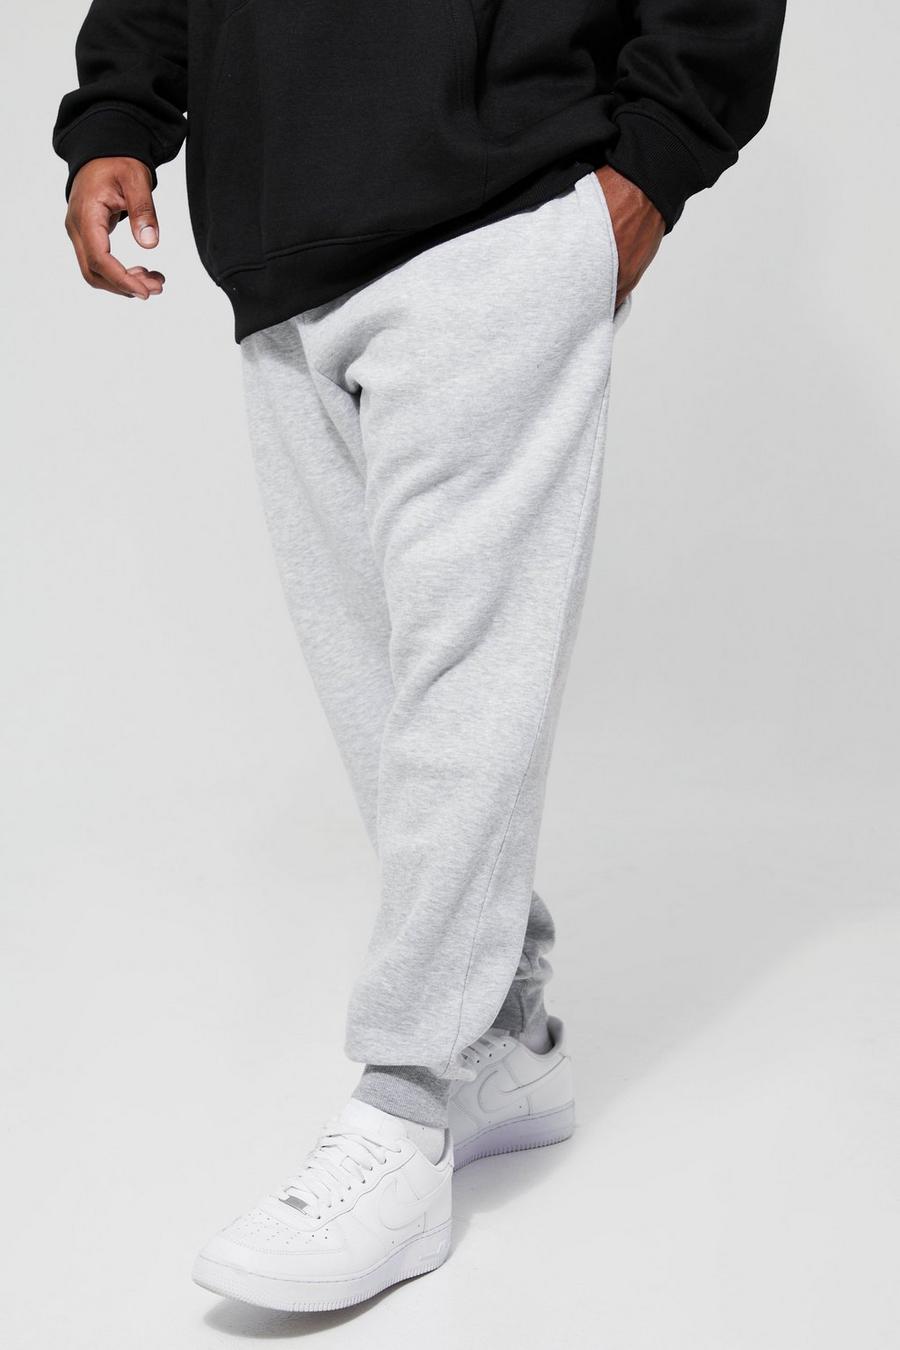 Pantalón deportivo Plus básico ajustado, Grey marl gris